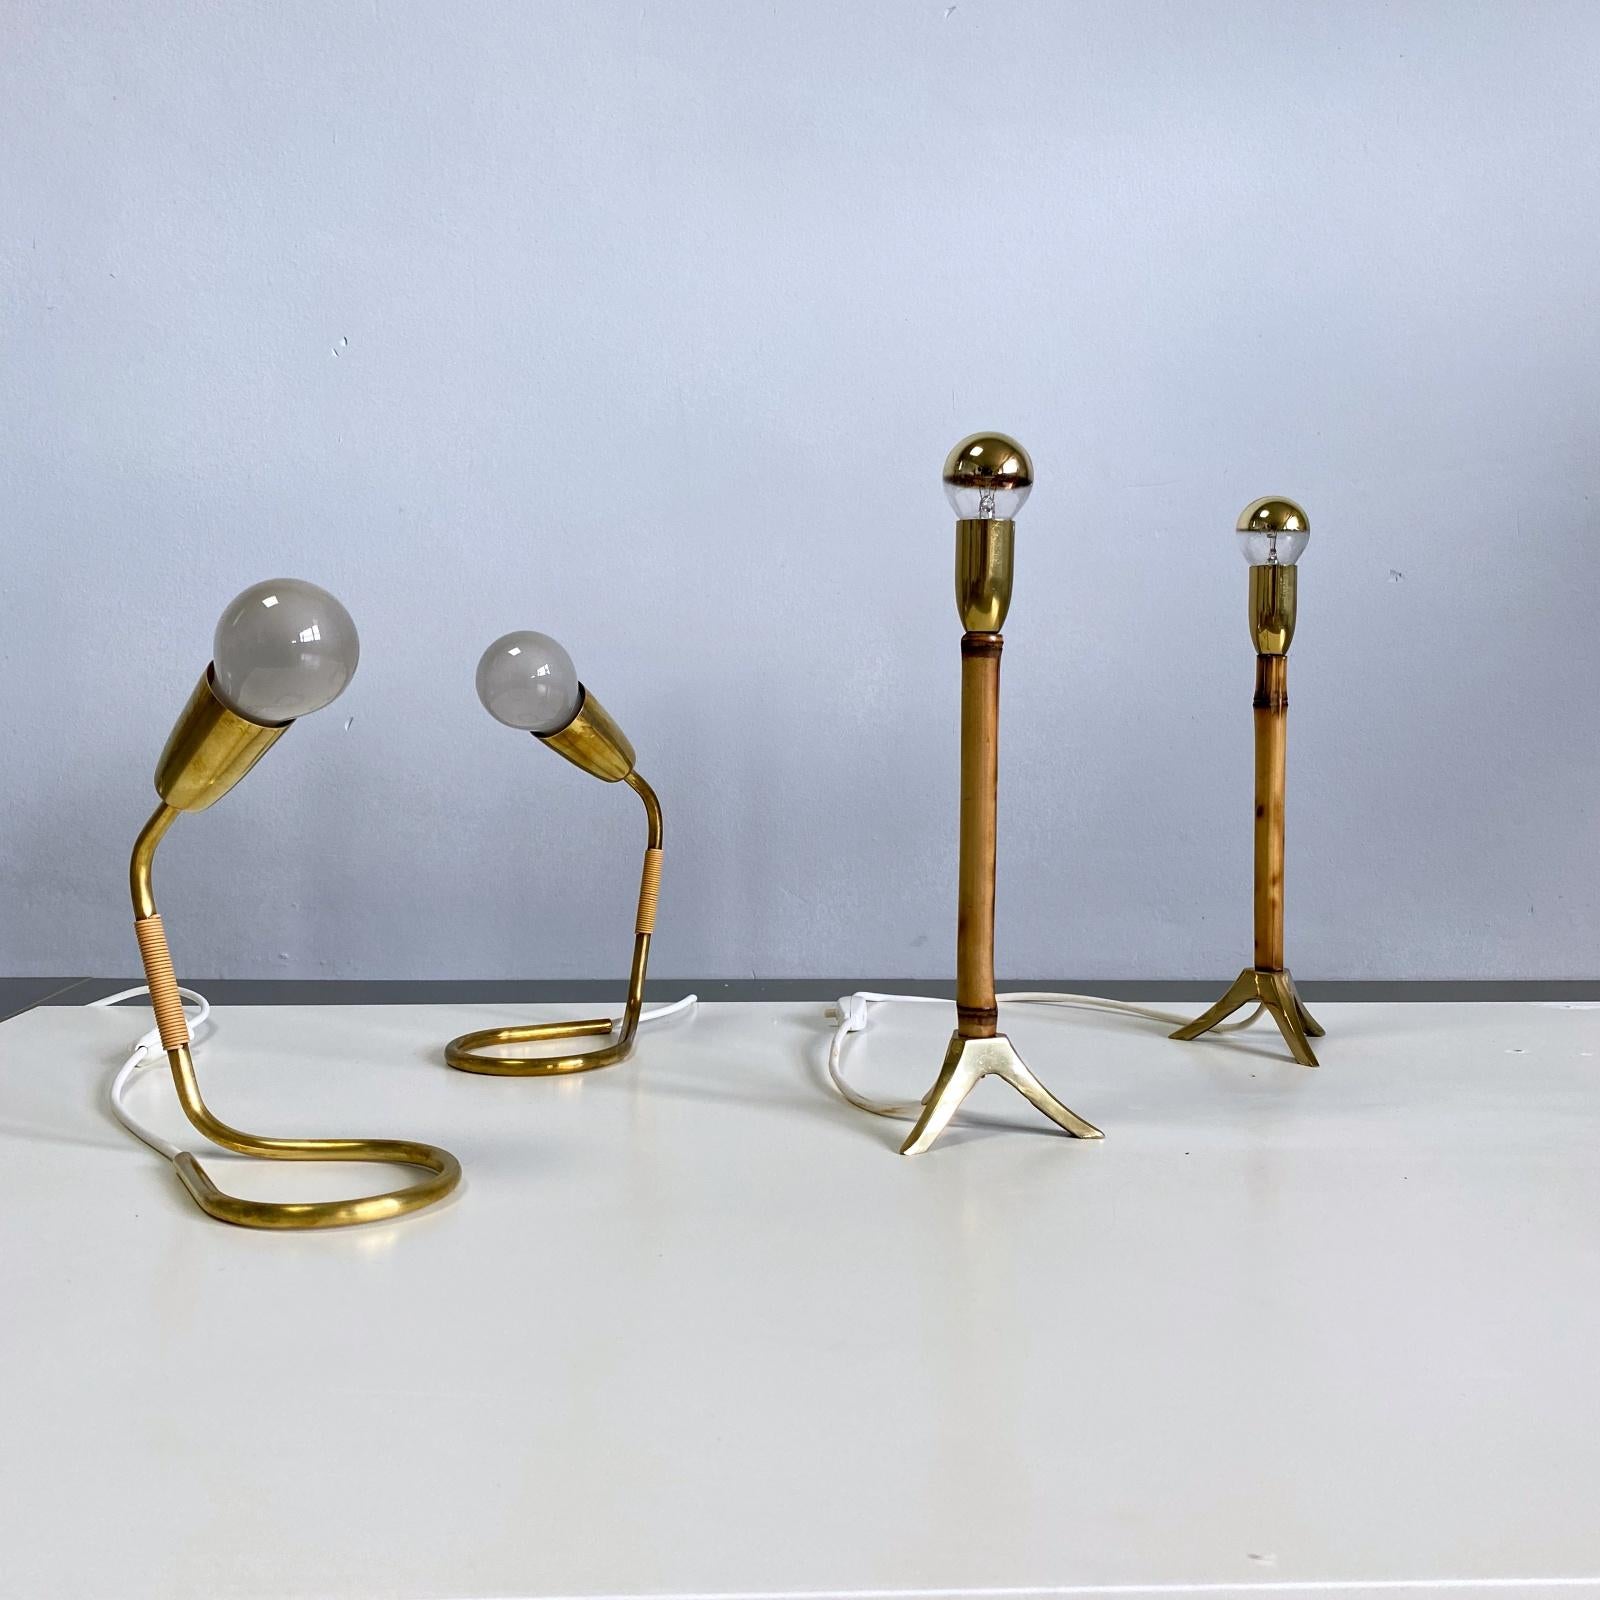 Two Midcentury Rupert Nikoll Brass & Bamboo Nightstand Table Lamp, 1955, Austria 1